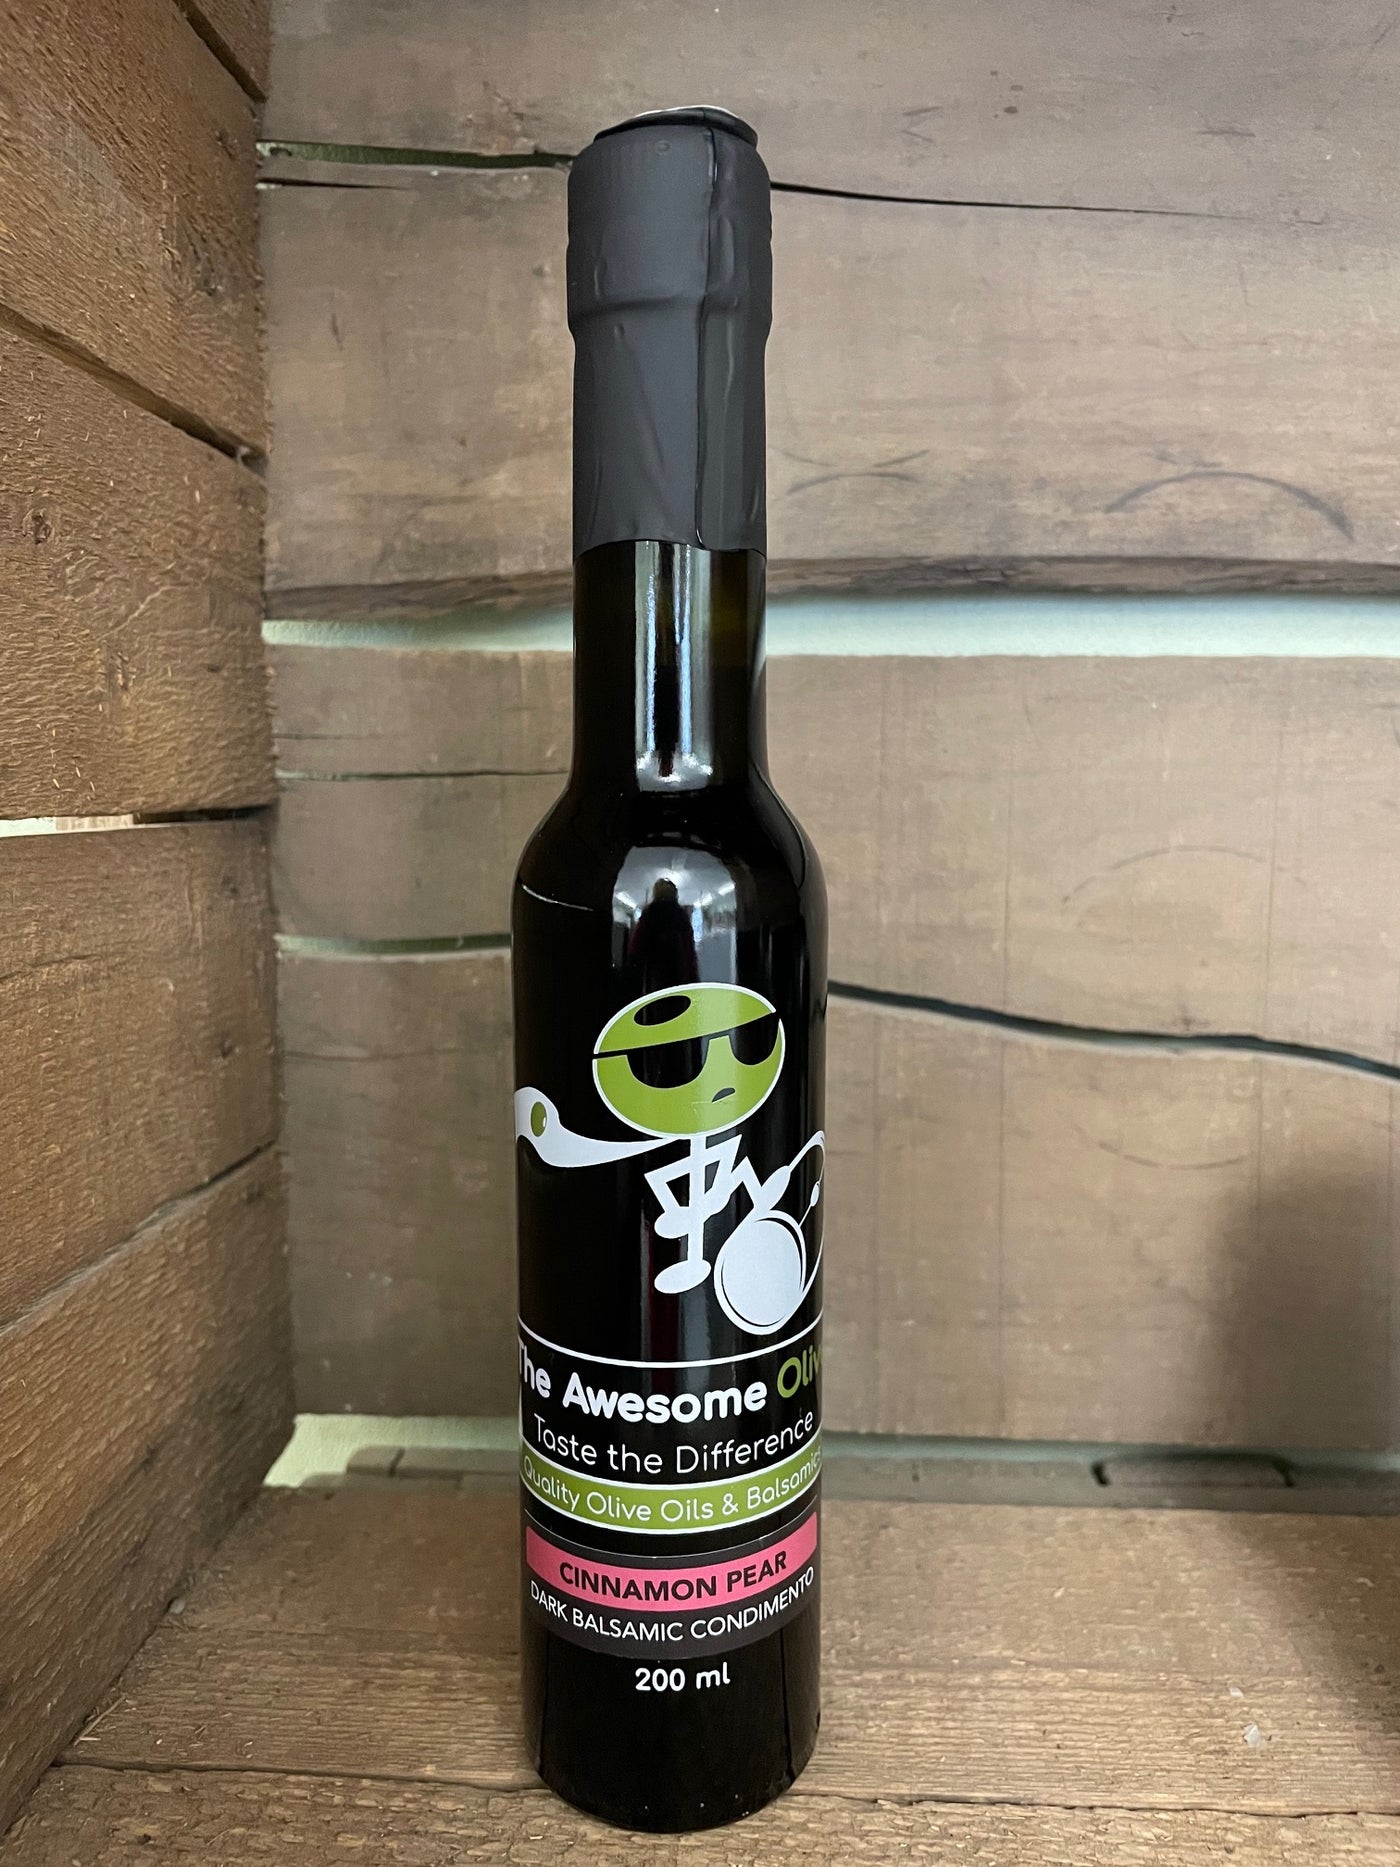 The Awesome Olive-Cinnamon Pear Dark Balsamic Vinegar